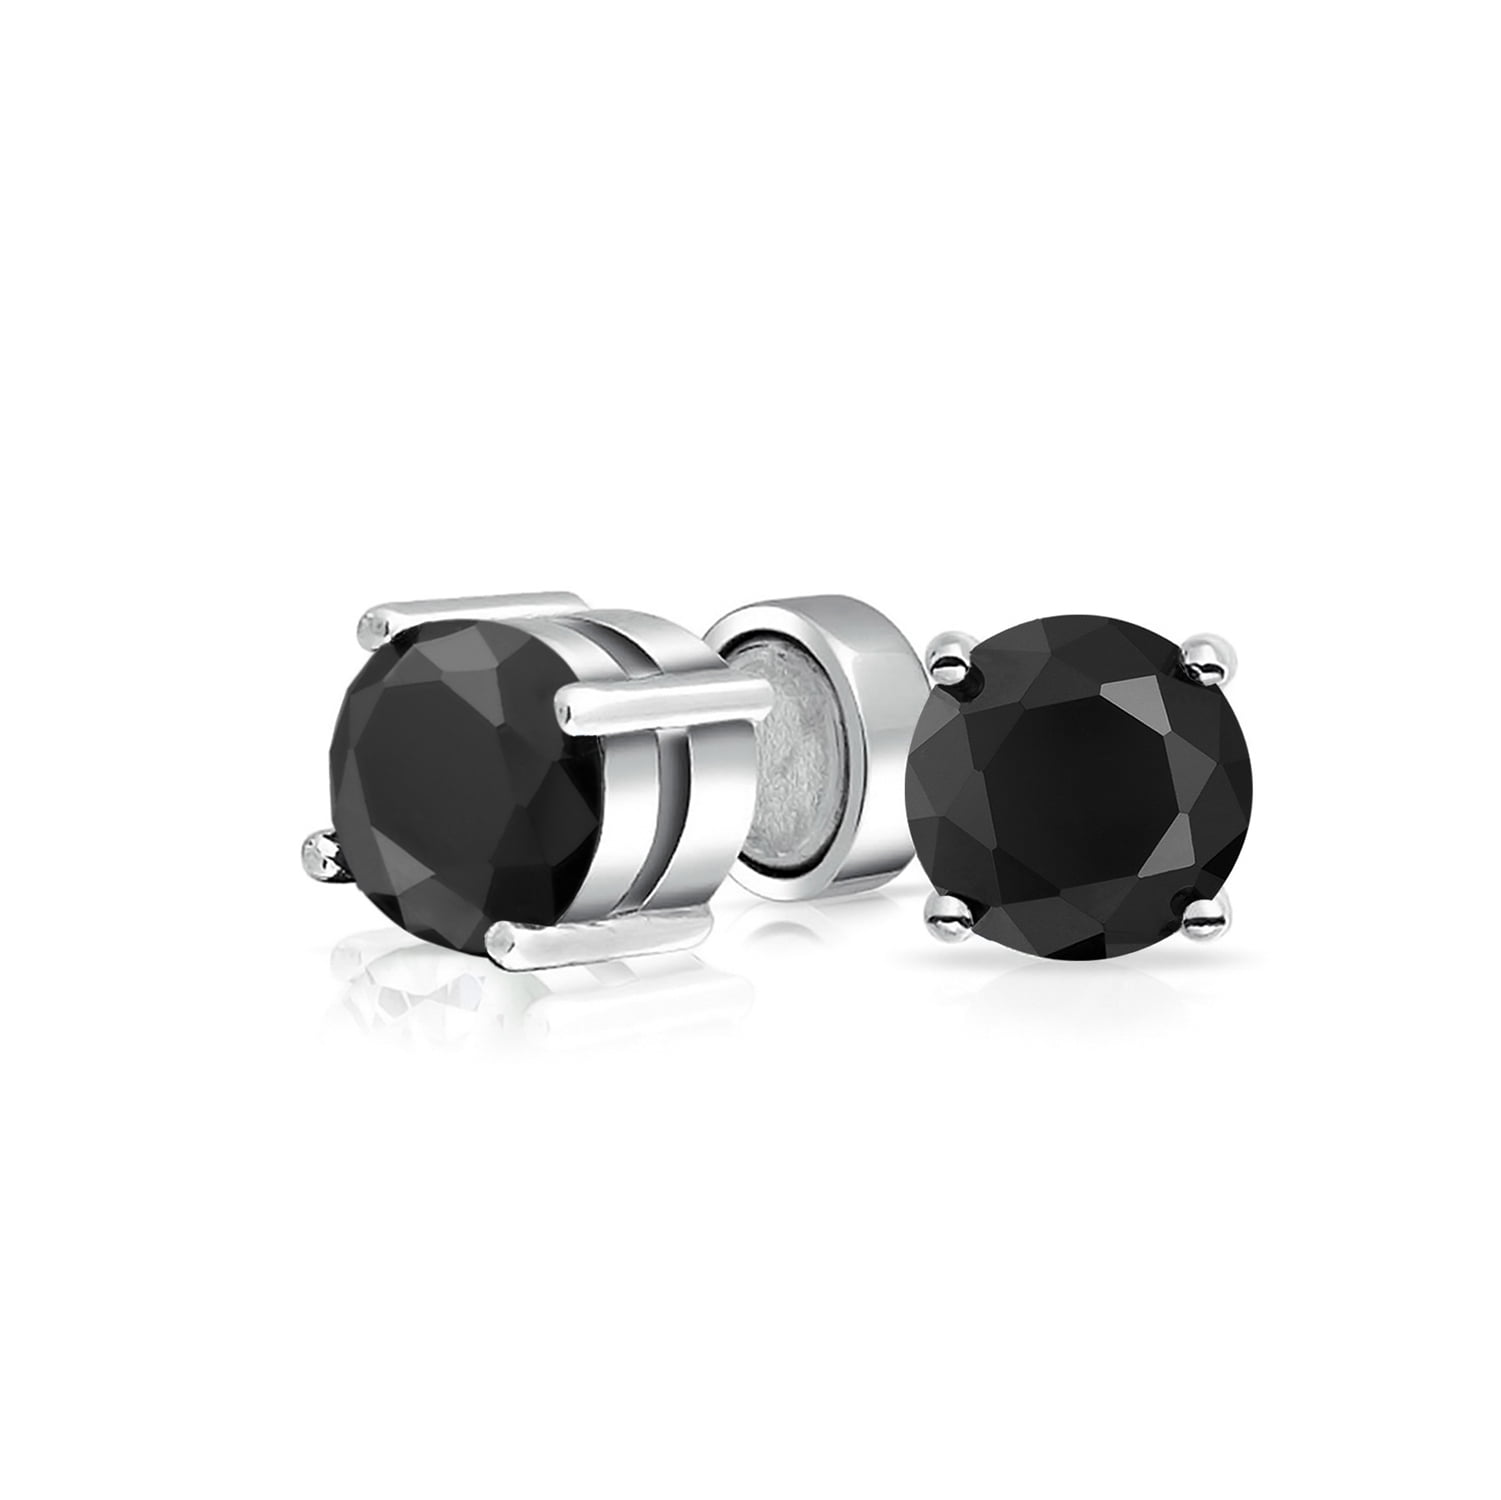 Black Gold 1 Pair Round Magnetic Stud Earring Ear Plug Non-Piercing For Men/Women 8mm Silver